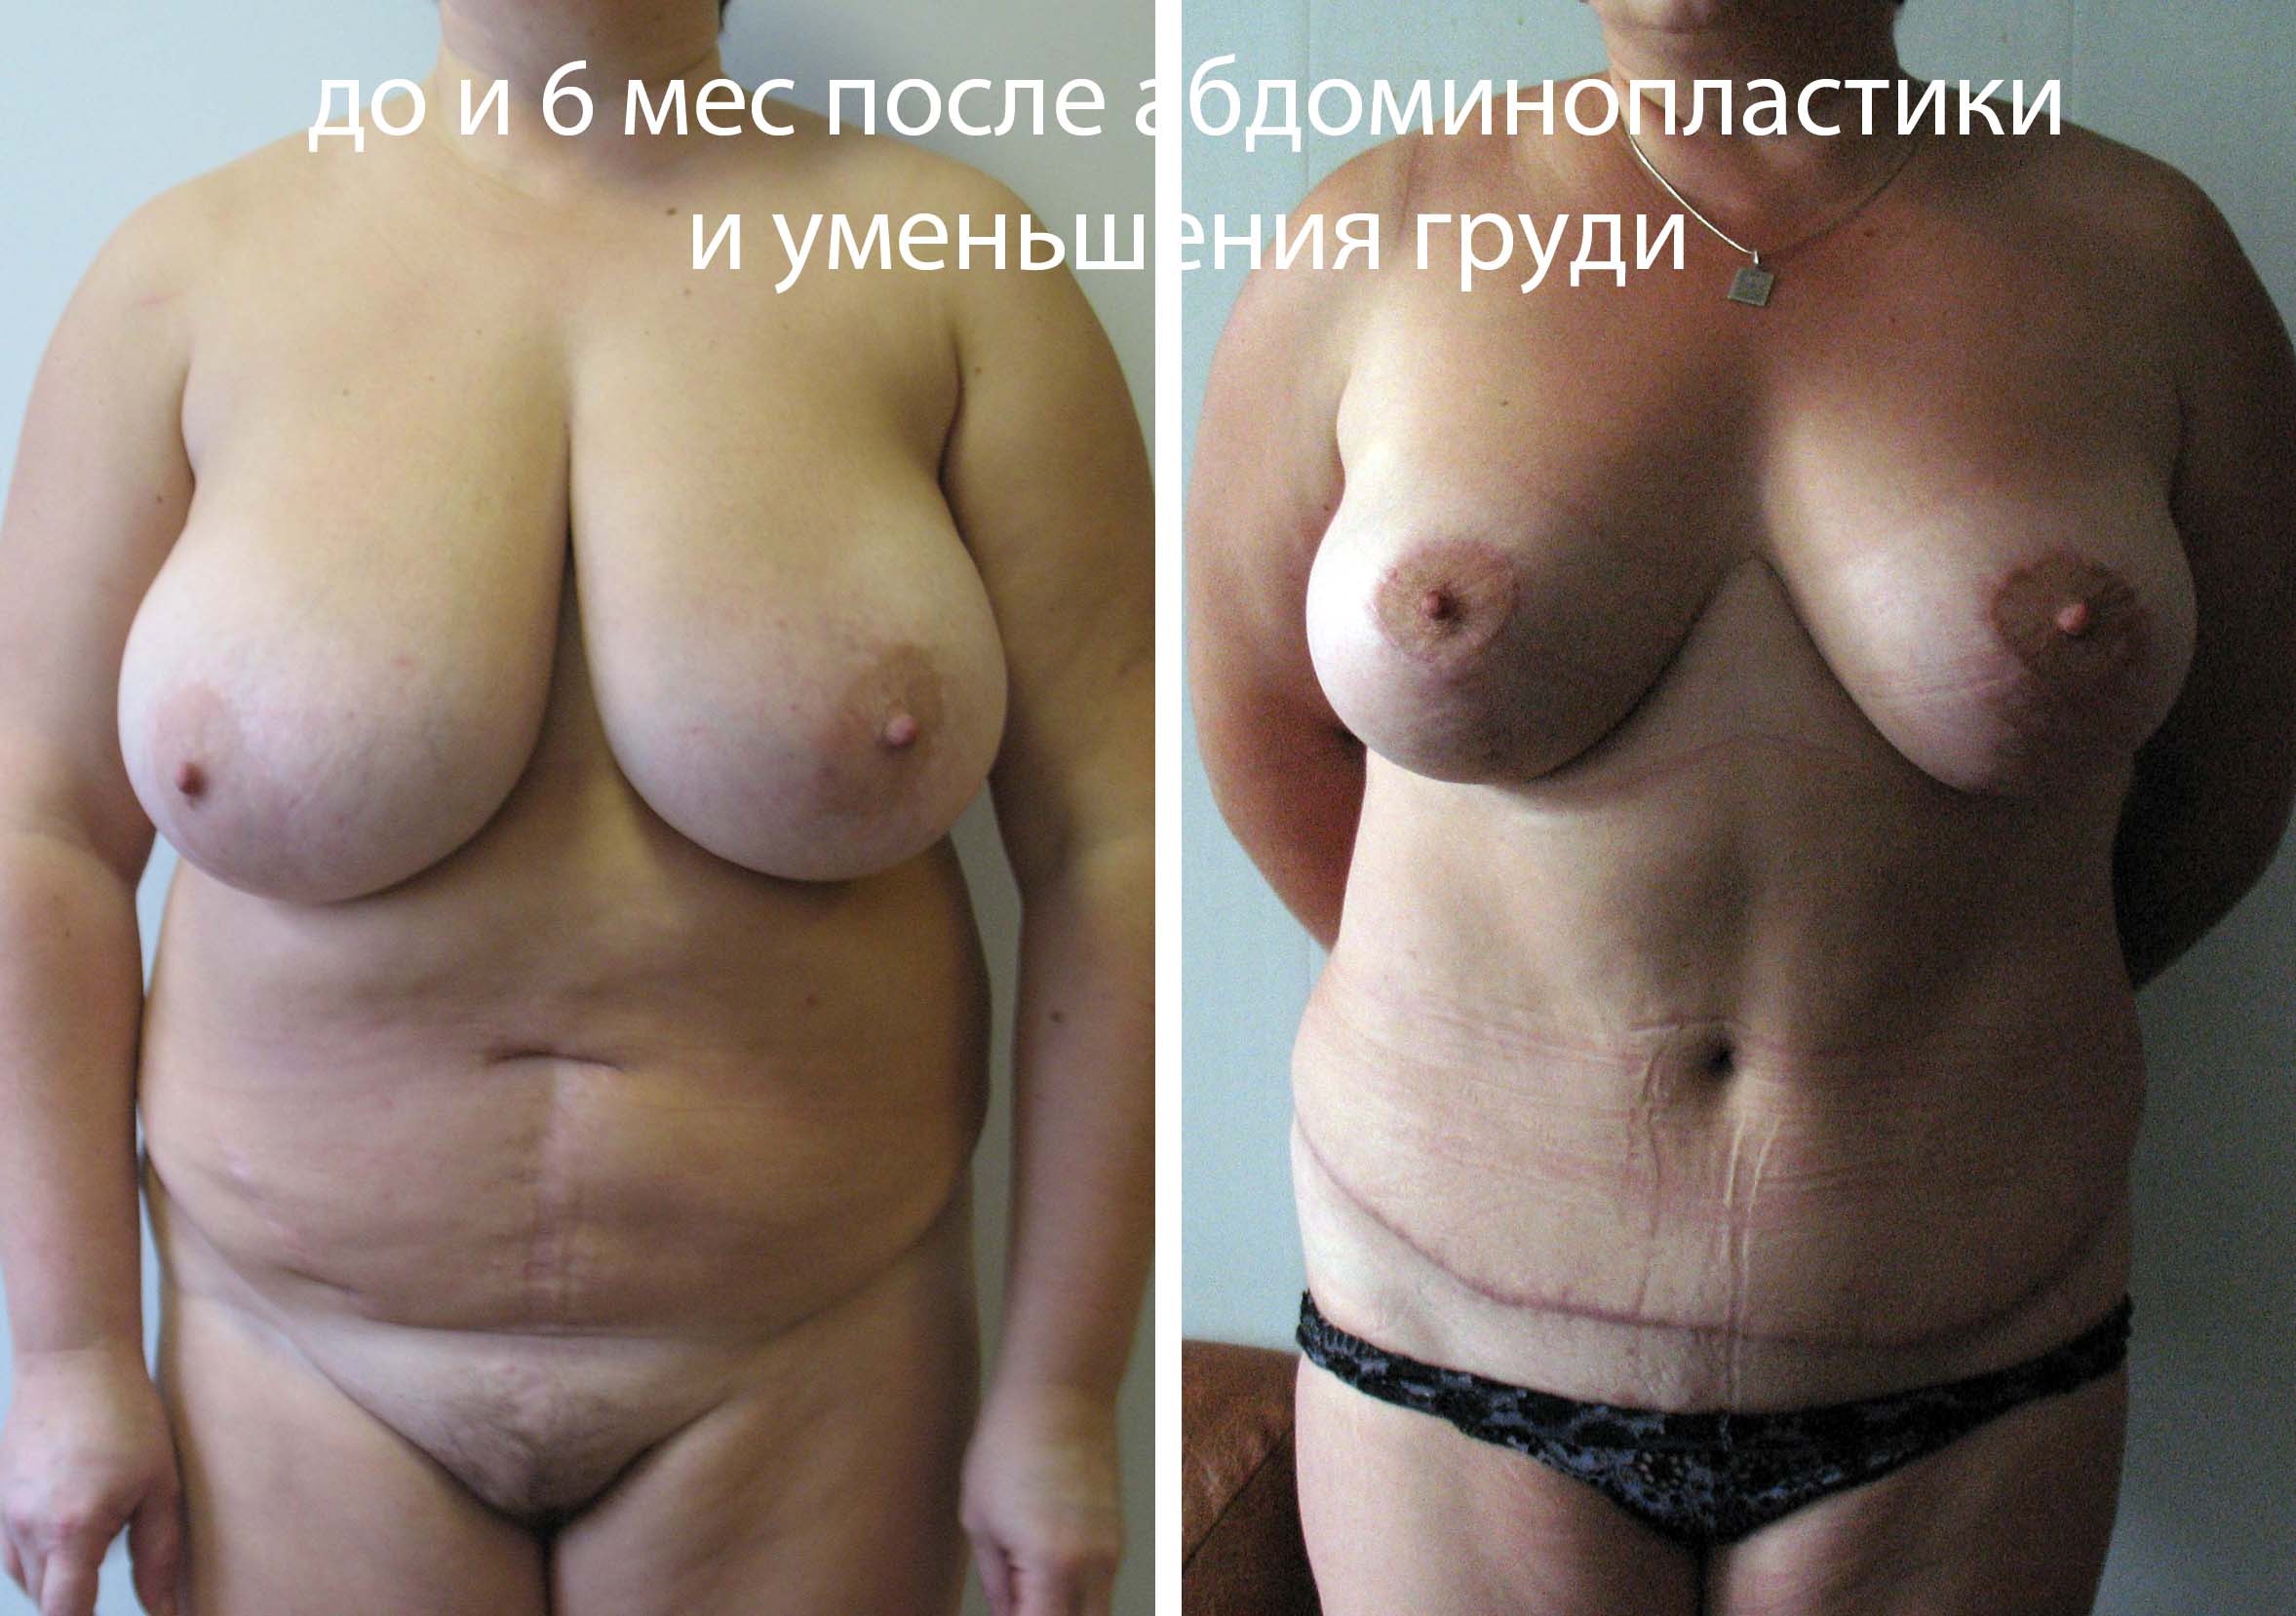 фото груди до беременности и после беременности фото 97